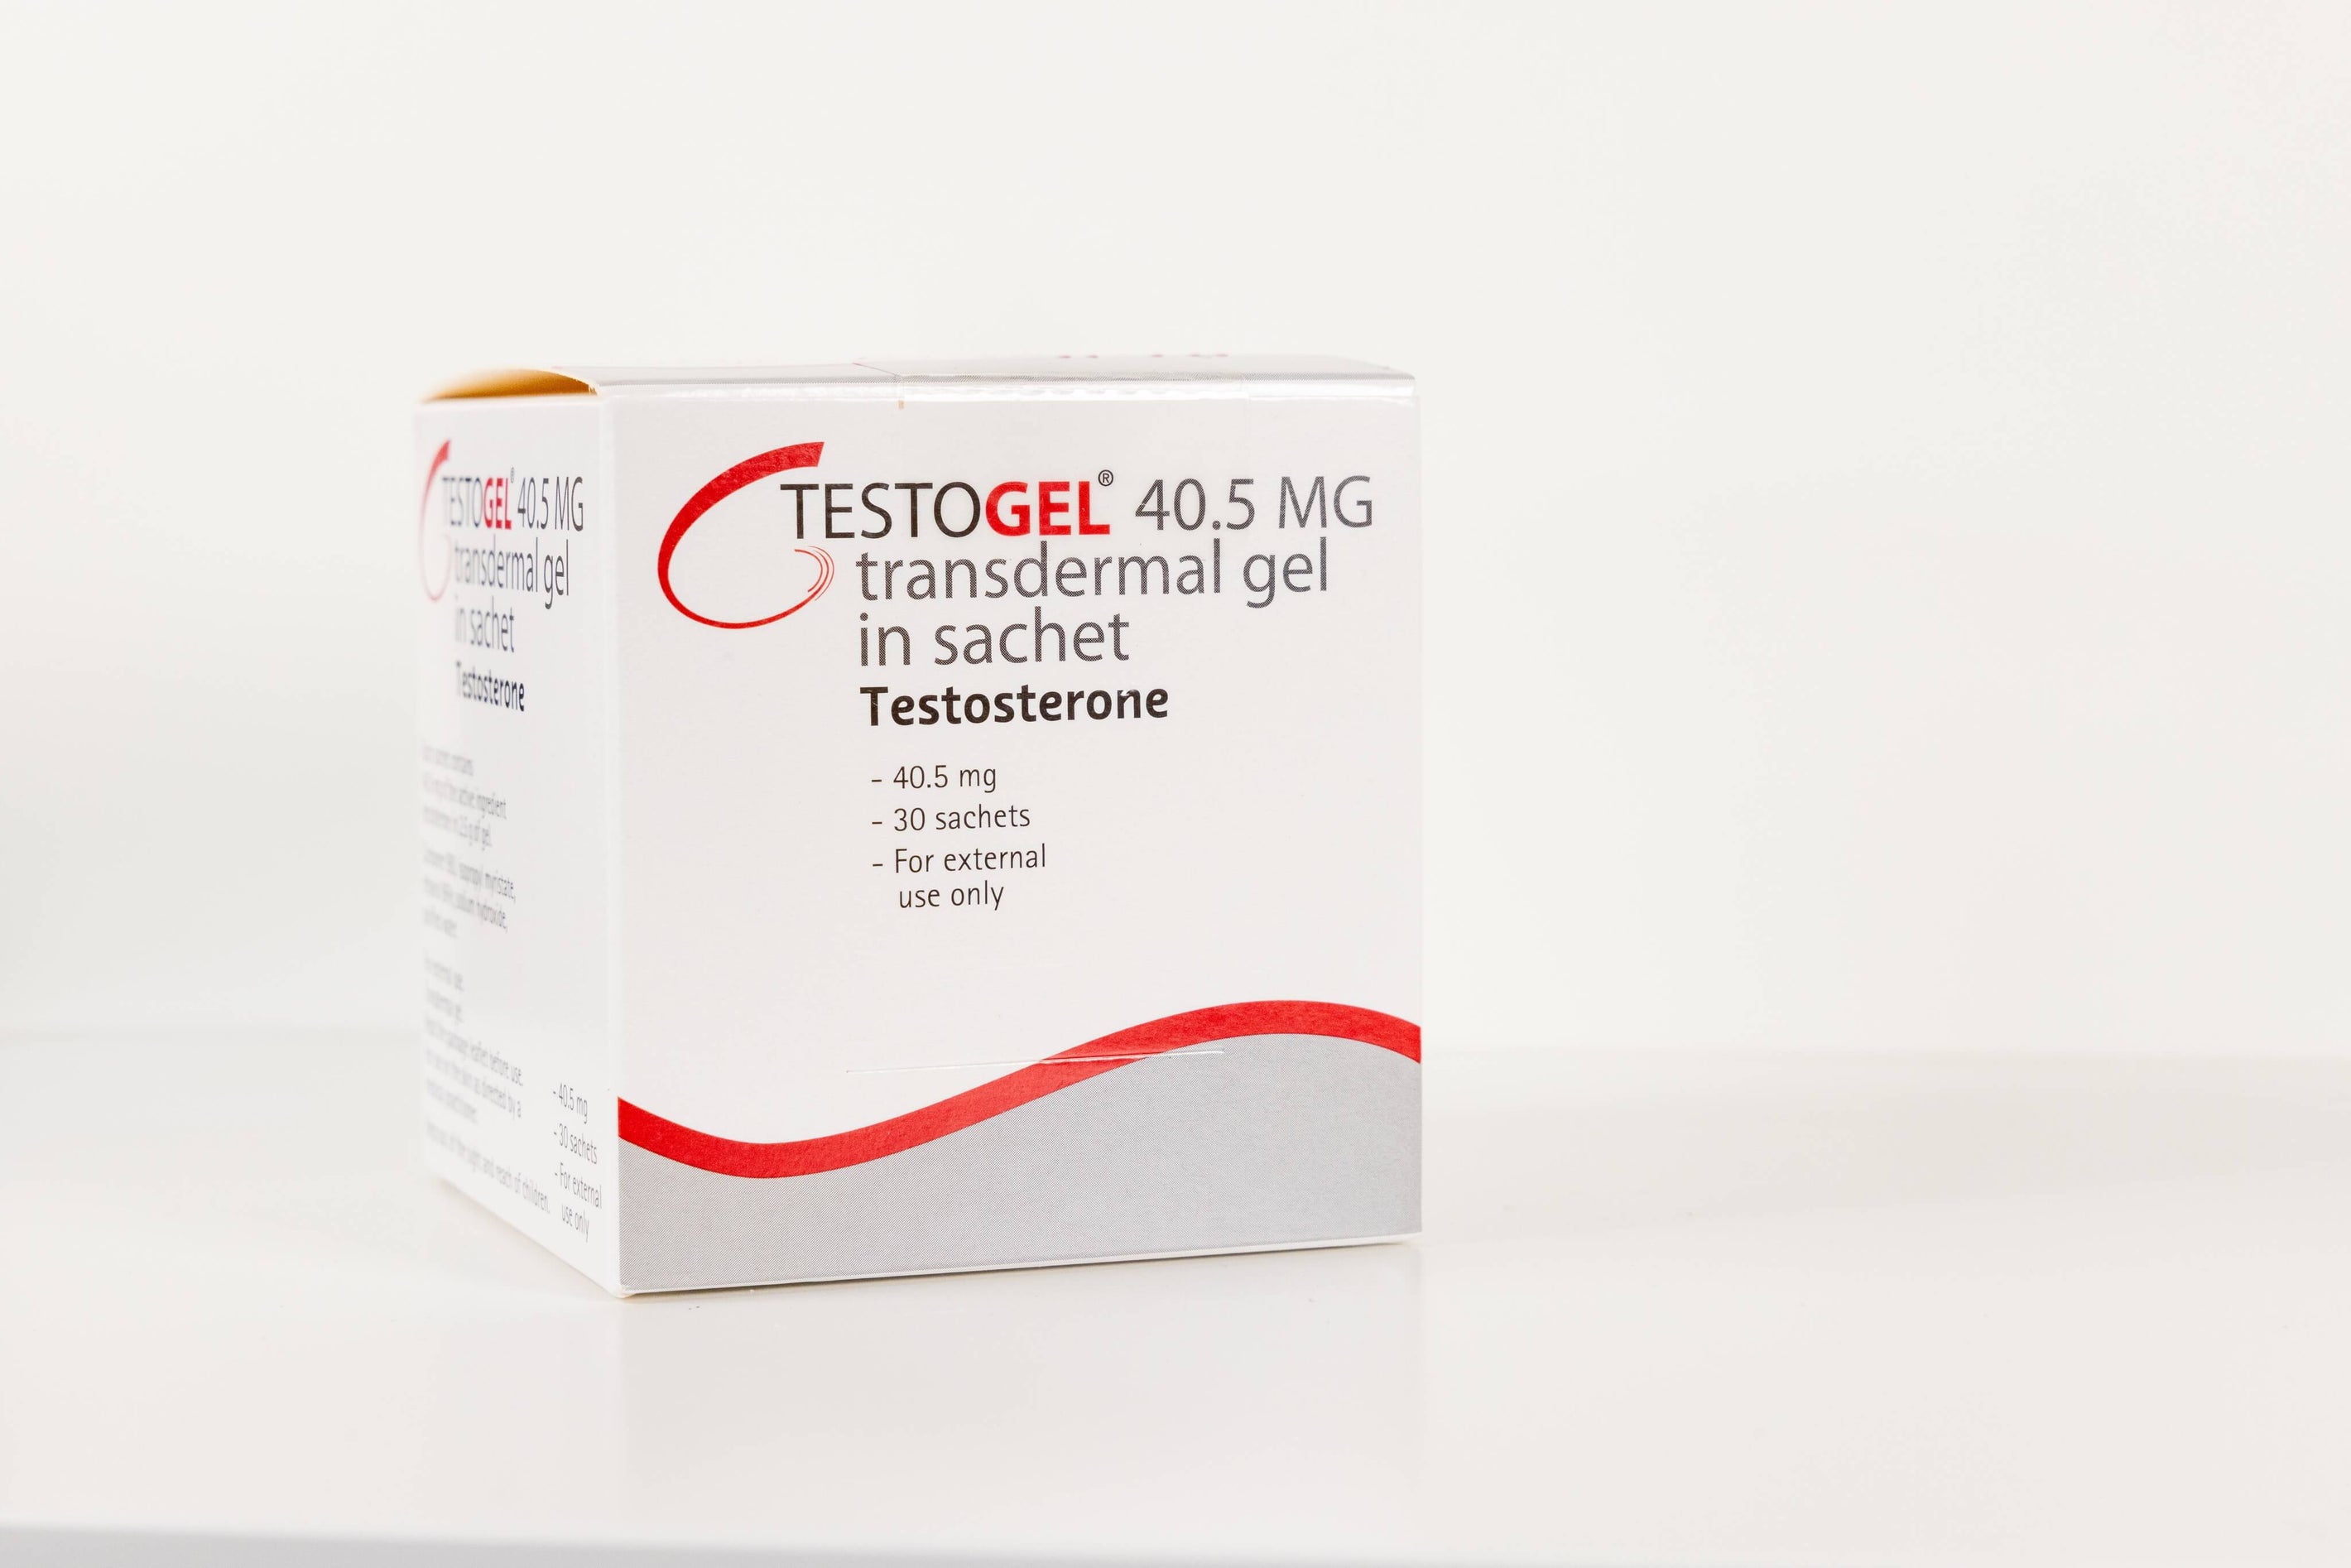 Testosterone Treatment